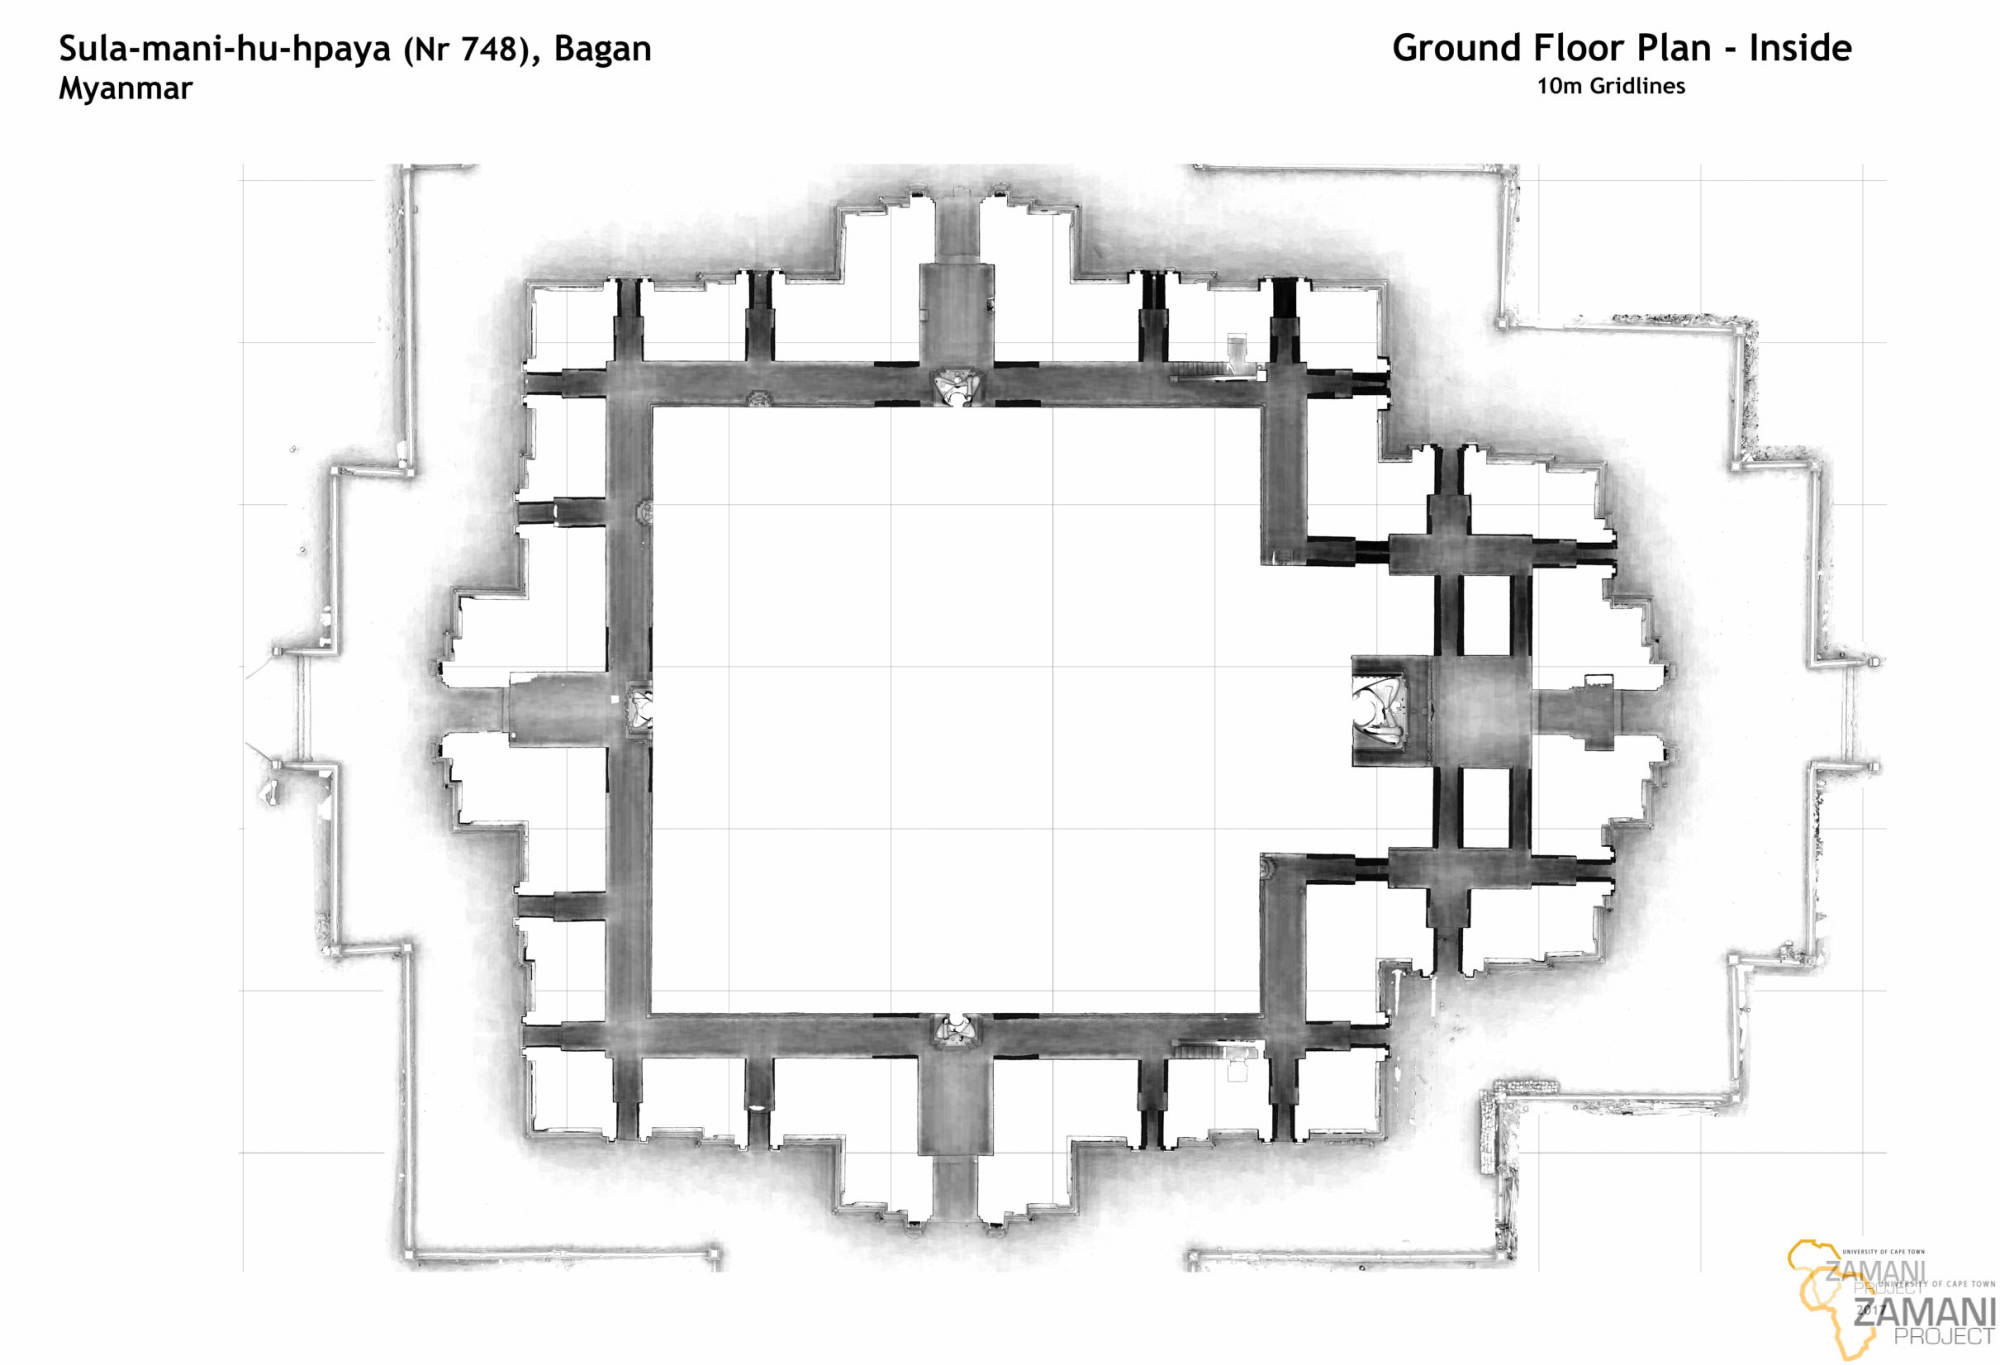 Ground Floor Plan of Sula-mani-hu-hpaya